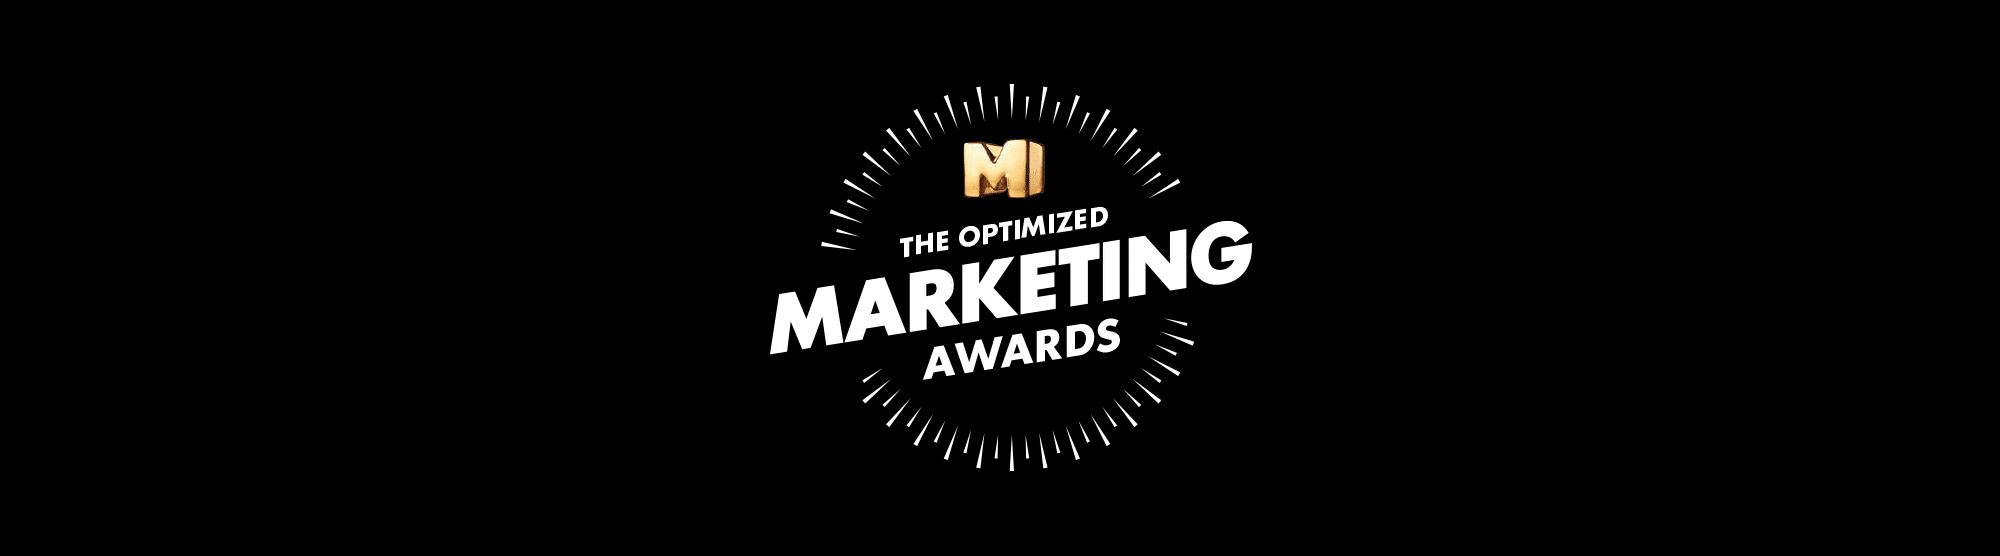 Marketing Awards